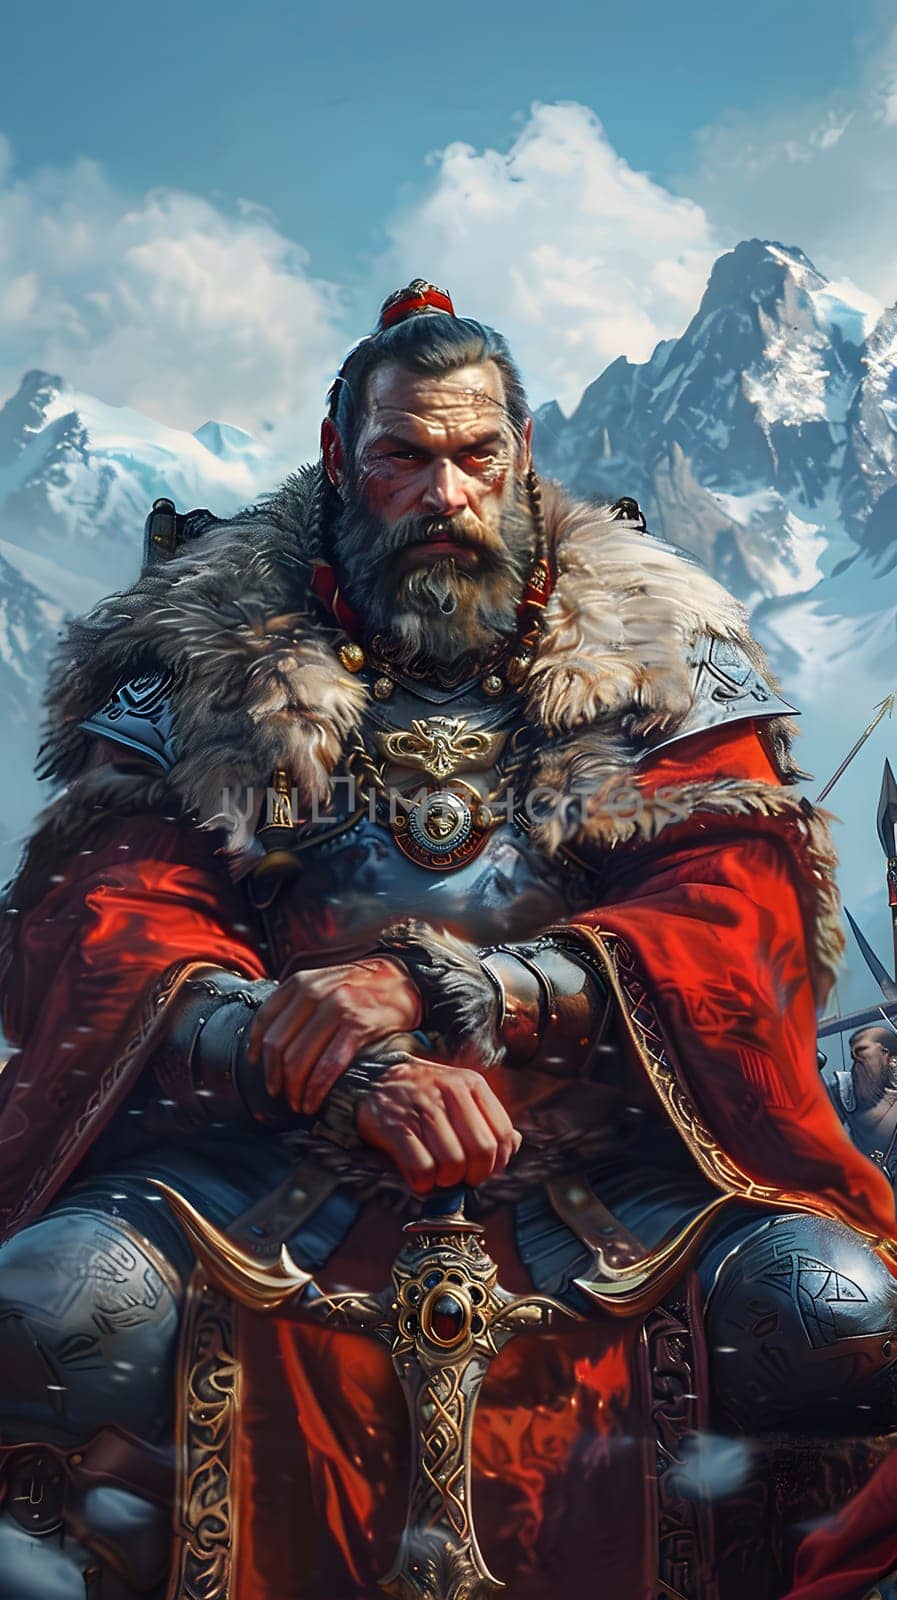 Bearded man on throne, facing snowy mountain. Mythologyinspired landscape art by Nadtochiy